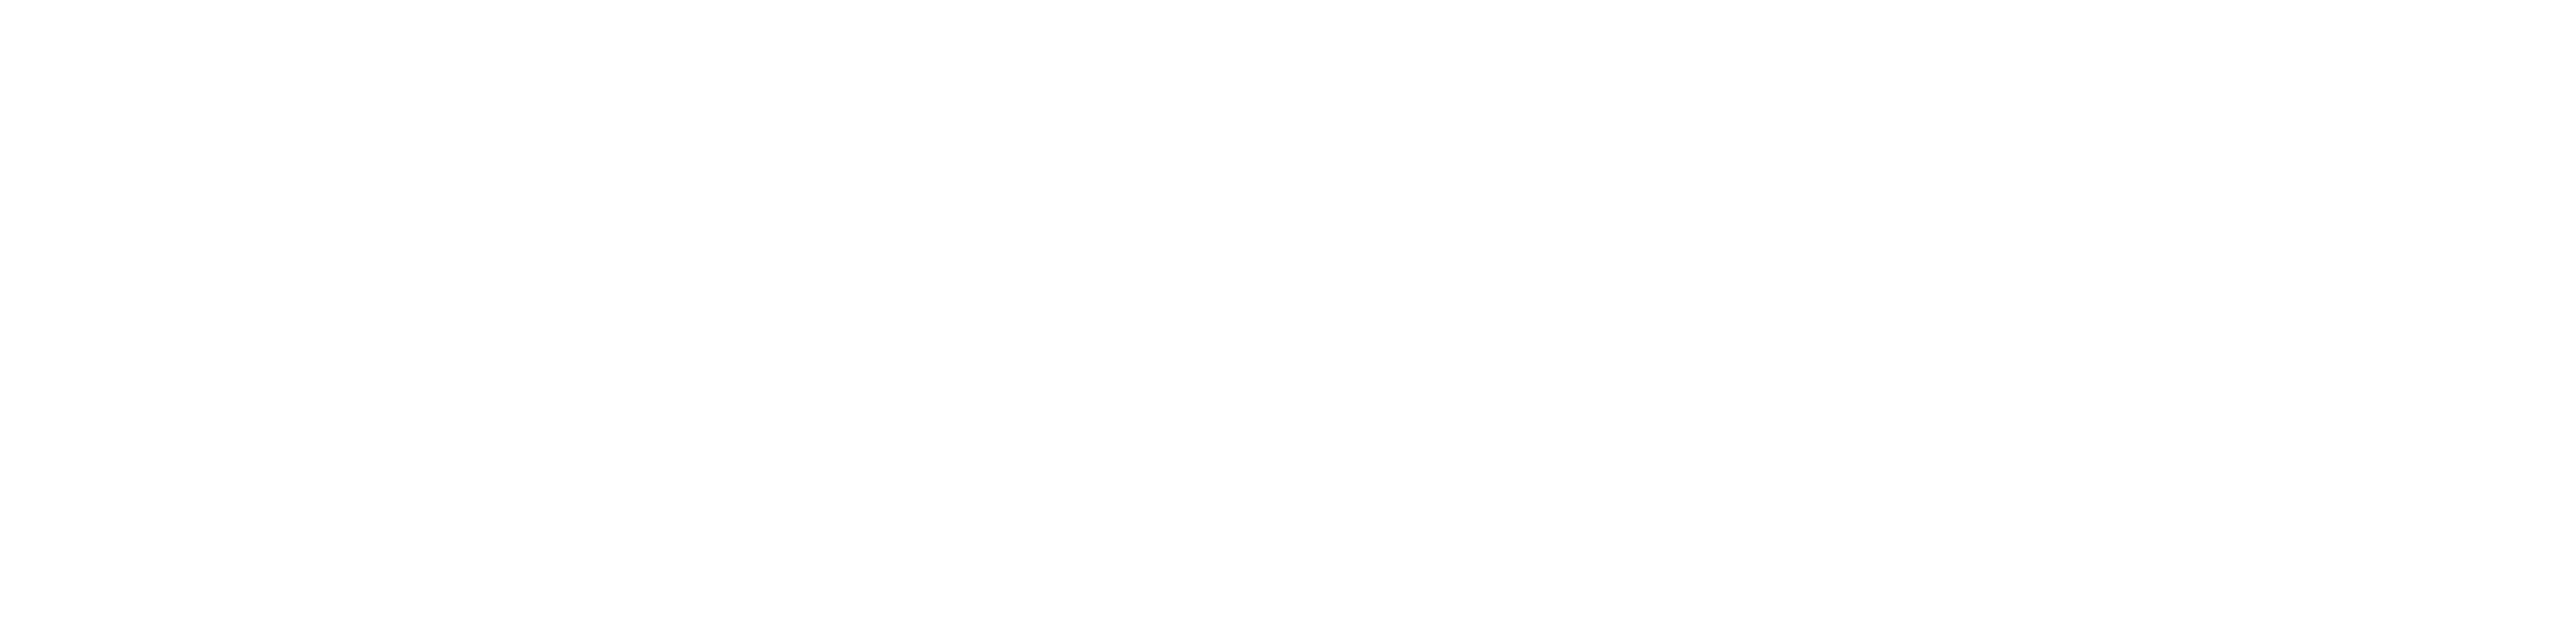 Hannity logo